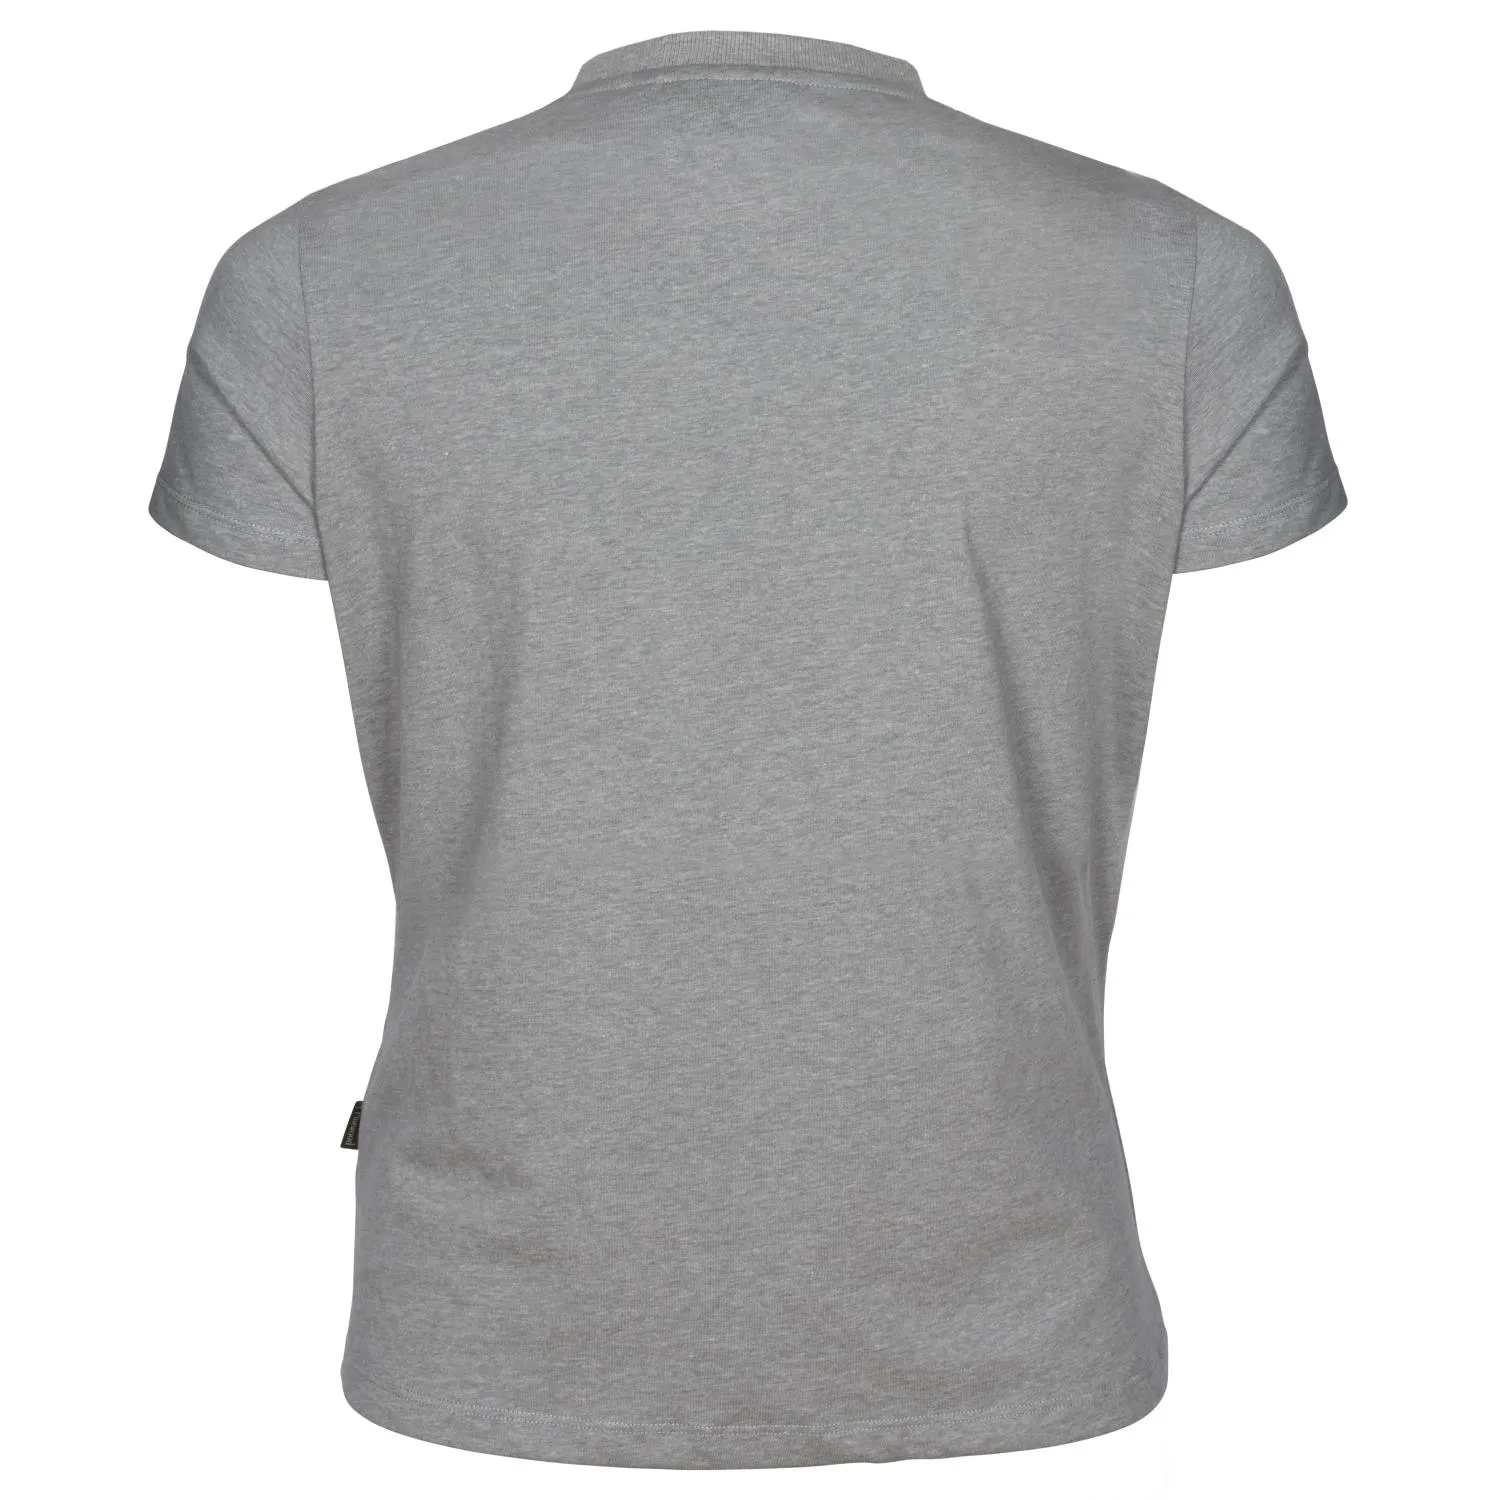 02_3321-454-06_Finnveden-Trail-T-shirt-Womens_Light-Grey-Melange (5476).jpg